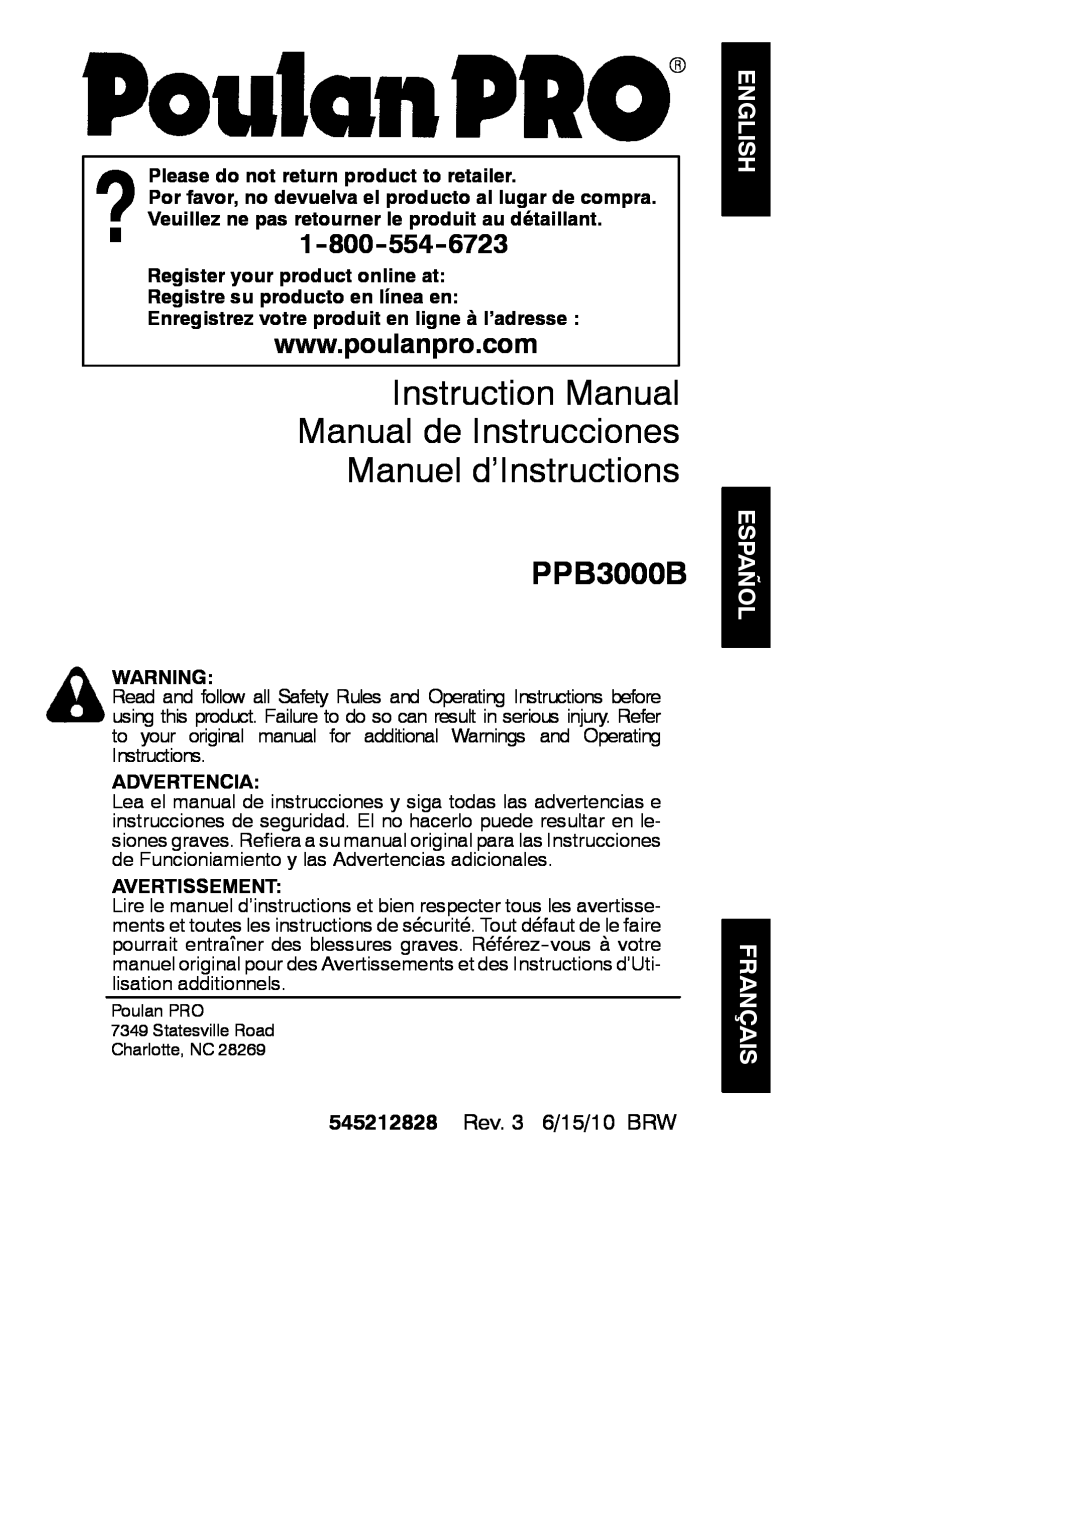 Poulan instruction manual English Español Français, PPB3000B, 545212828 Rev. 3 6/15/10 BRW, Advertencia, Avertissement 